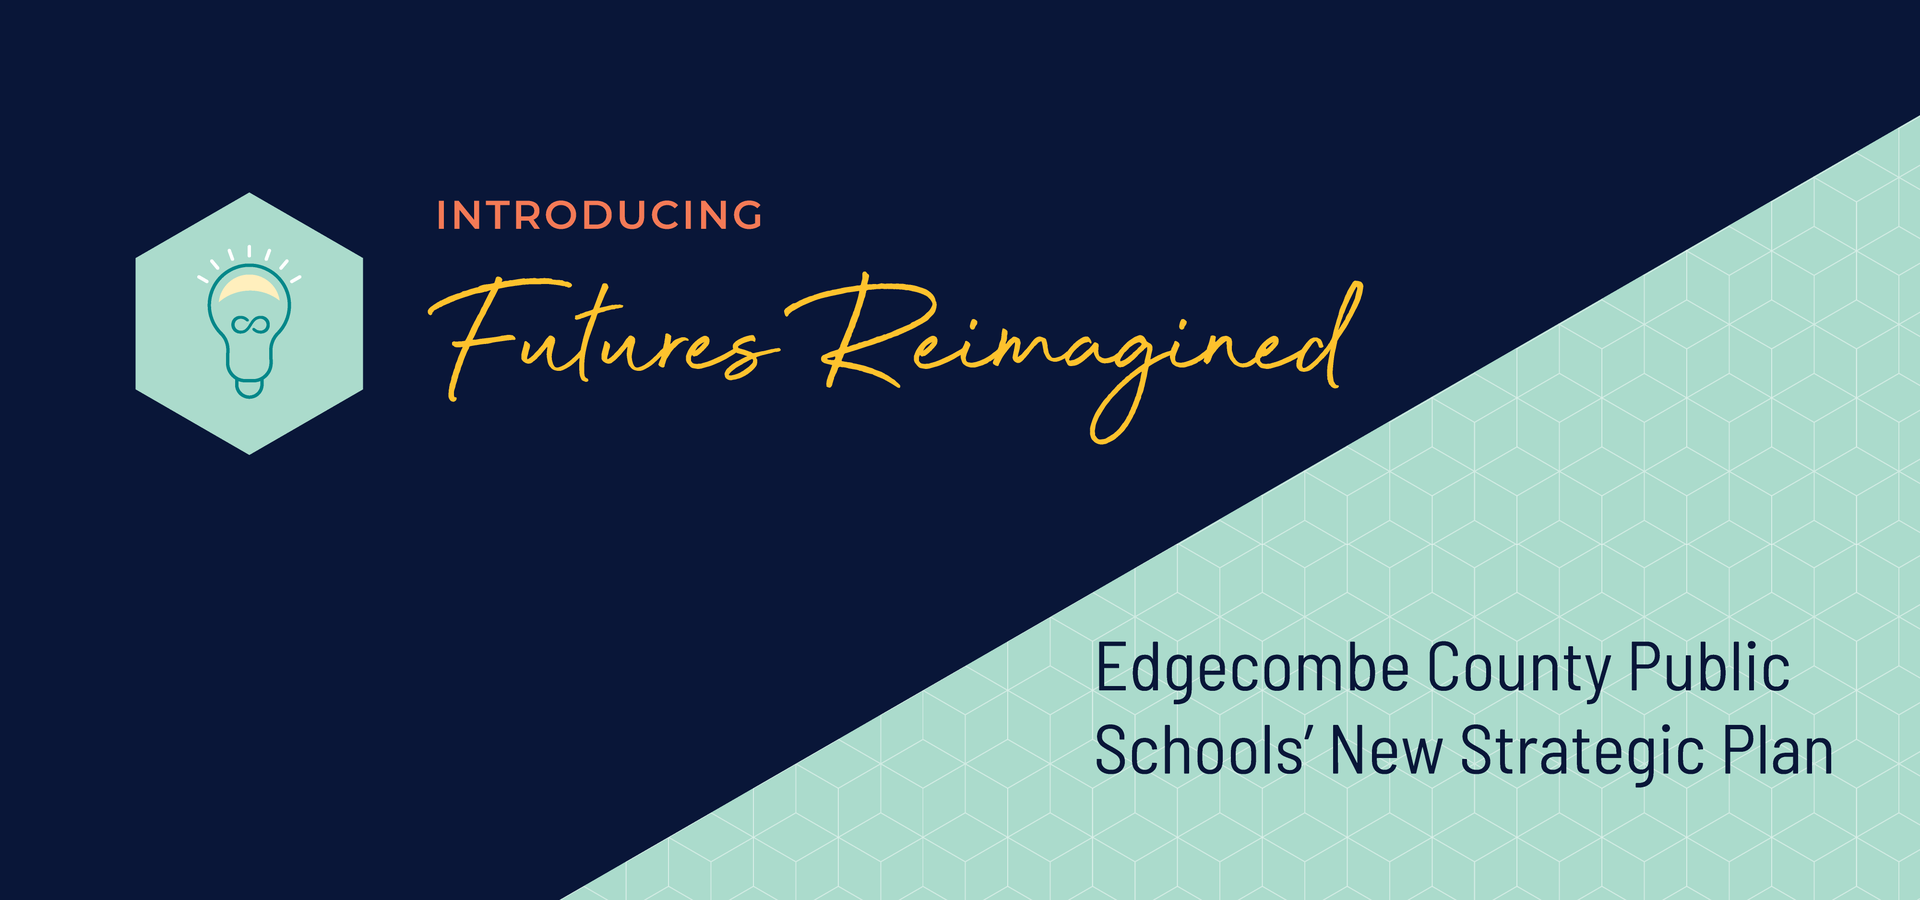 Introducing Futures Reimagined, Edgecombe County Public School's New Strategic Plan